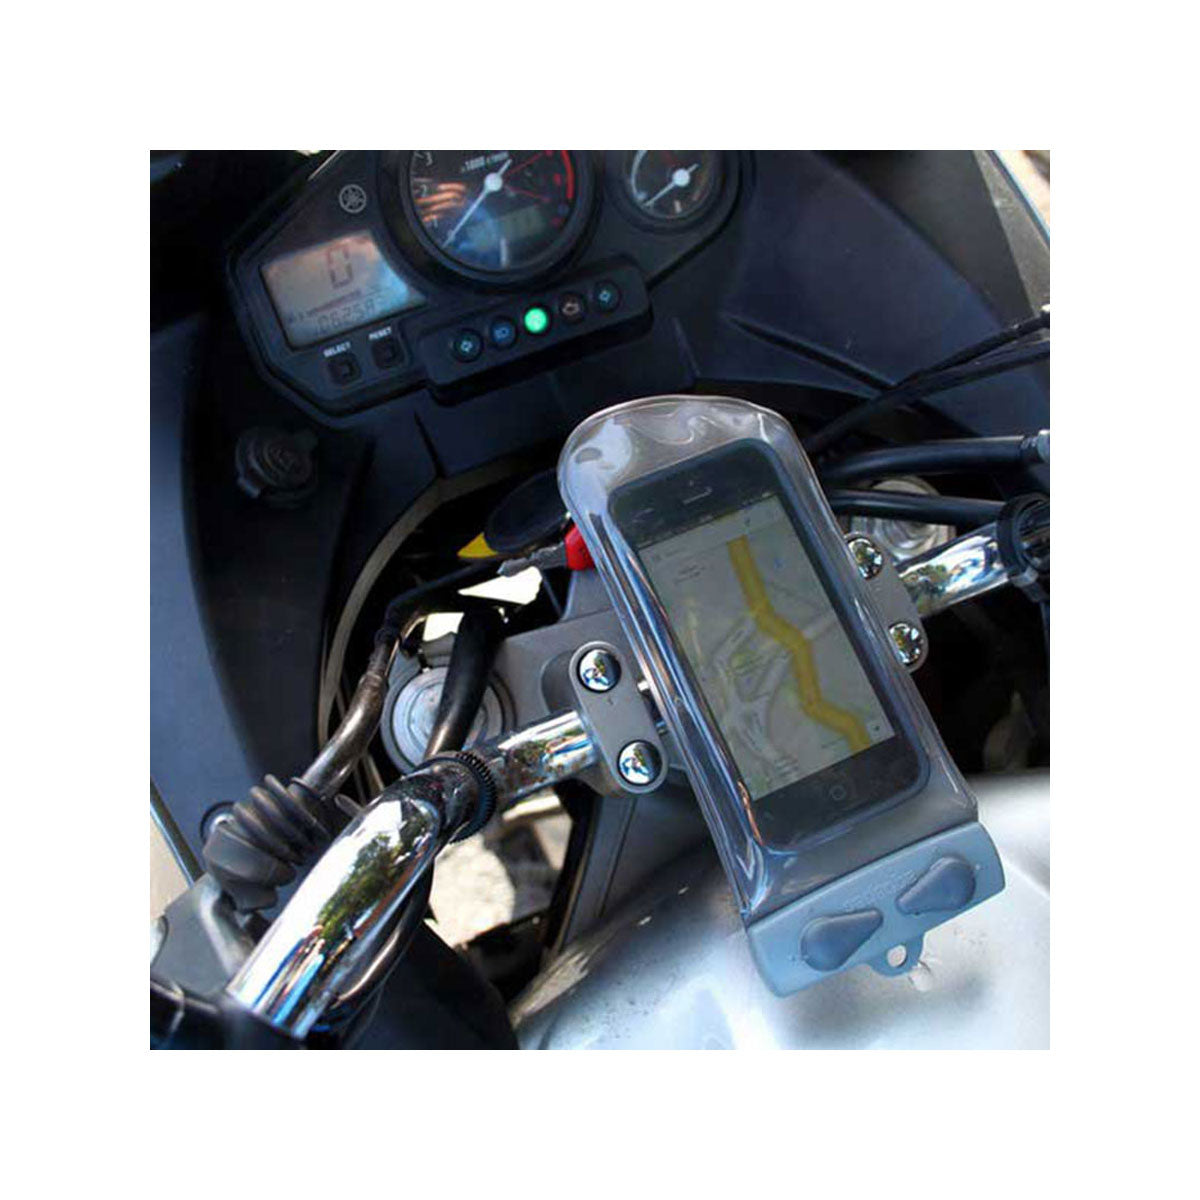 Aquapac Bike-Mounted Waterproof Phone Case for screen size upto 5.5 inches 5